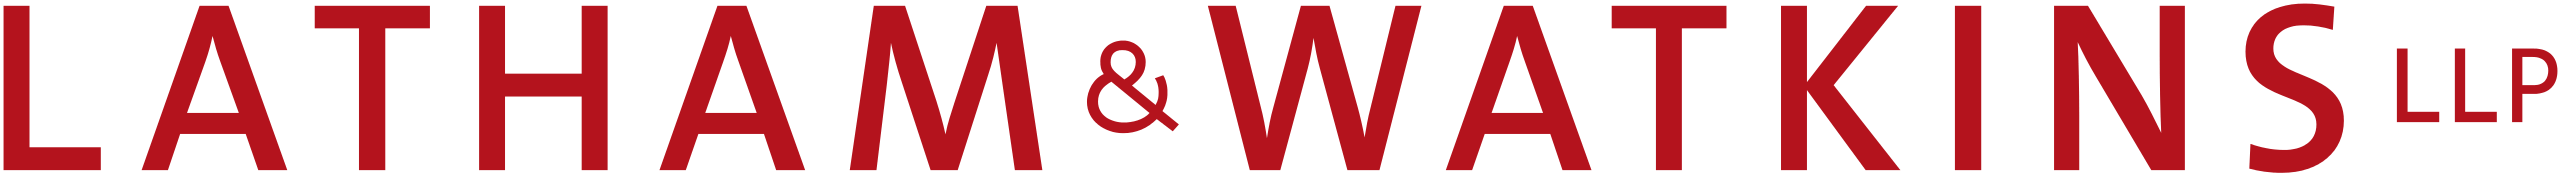 logo-latham-watkins